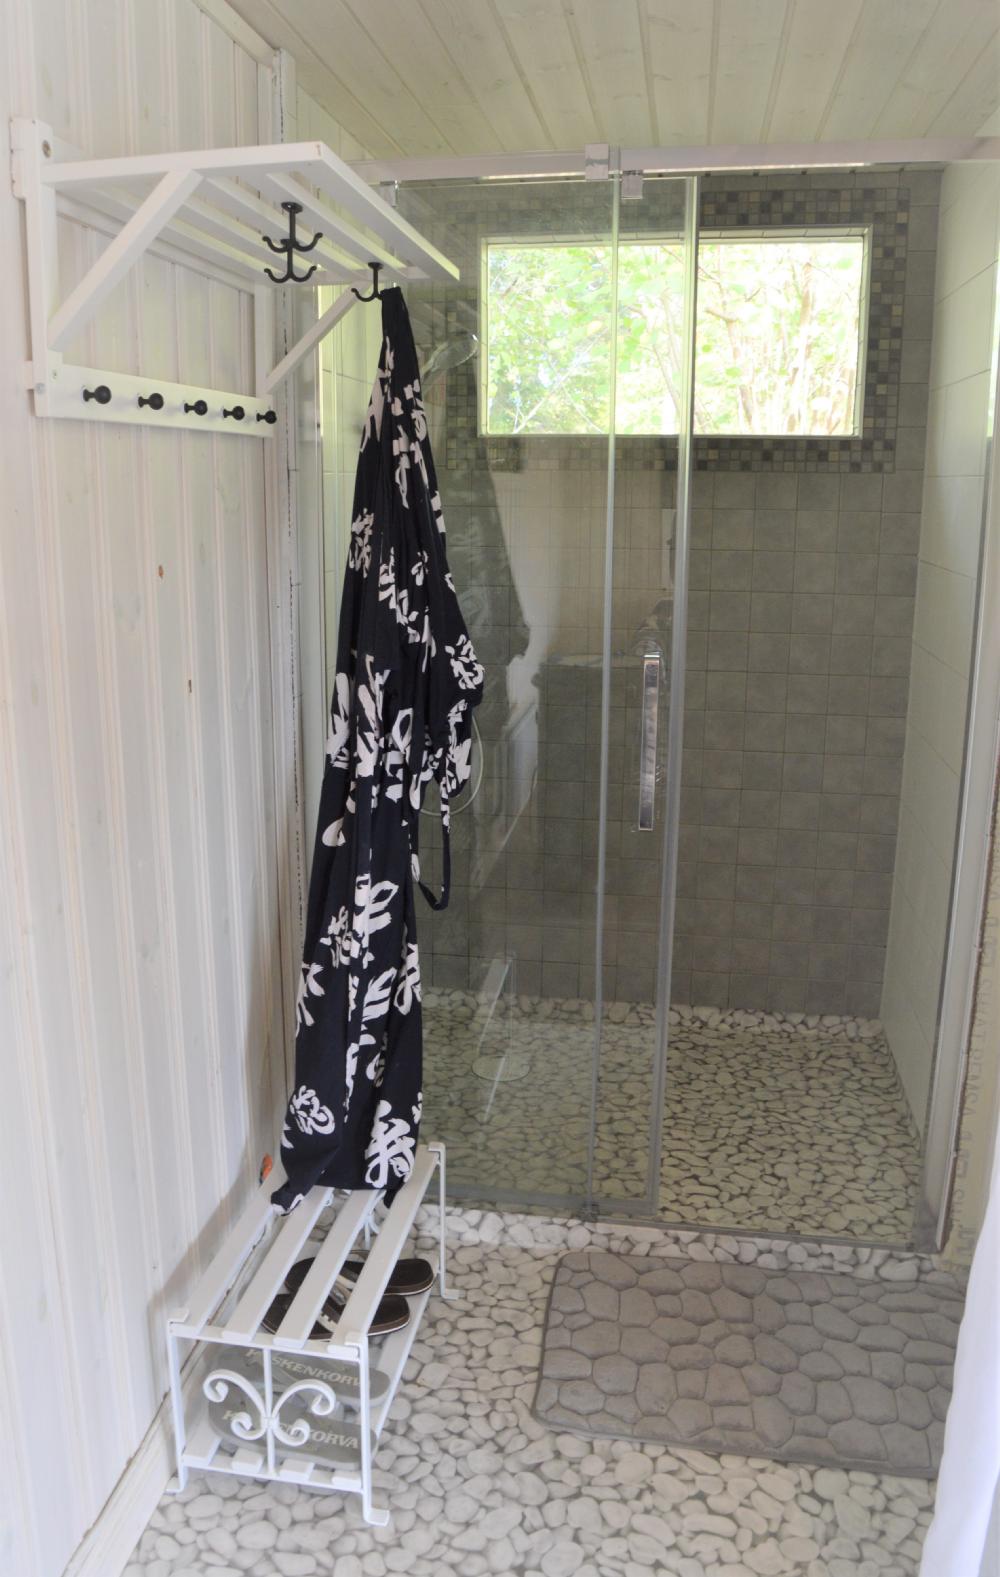 Dusch / Shower in the sauna house 